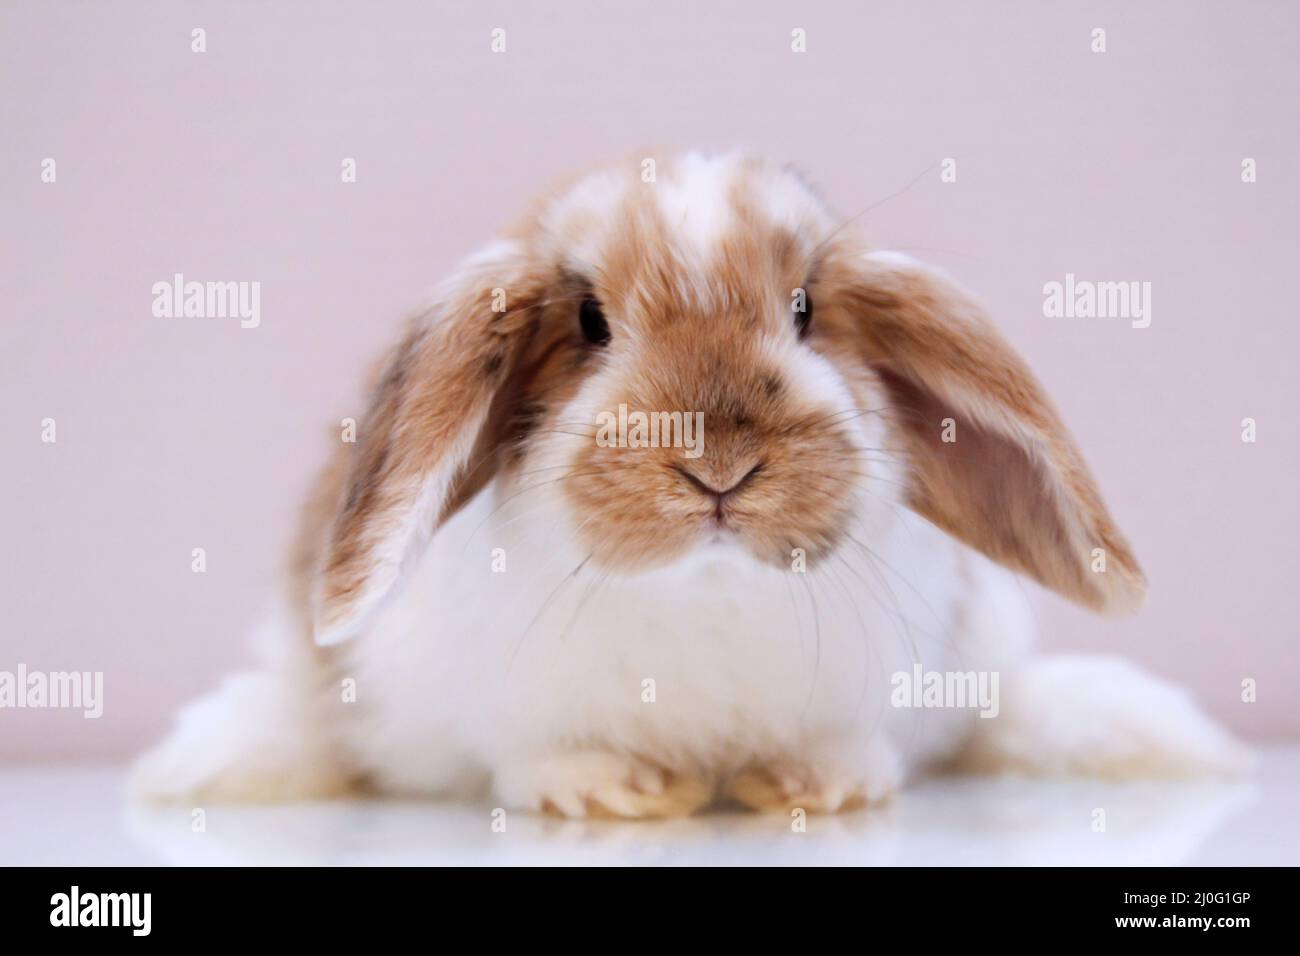 A photo shoot of a small dwarf rabbit. Stock Photo